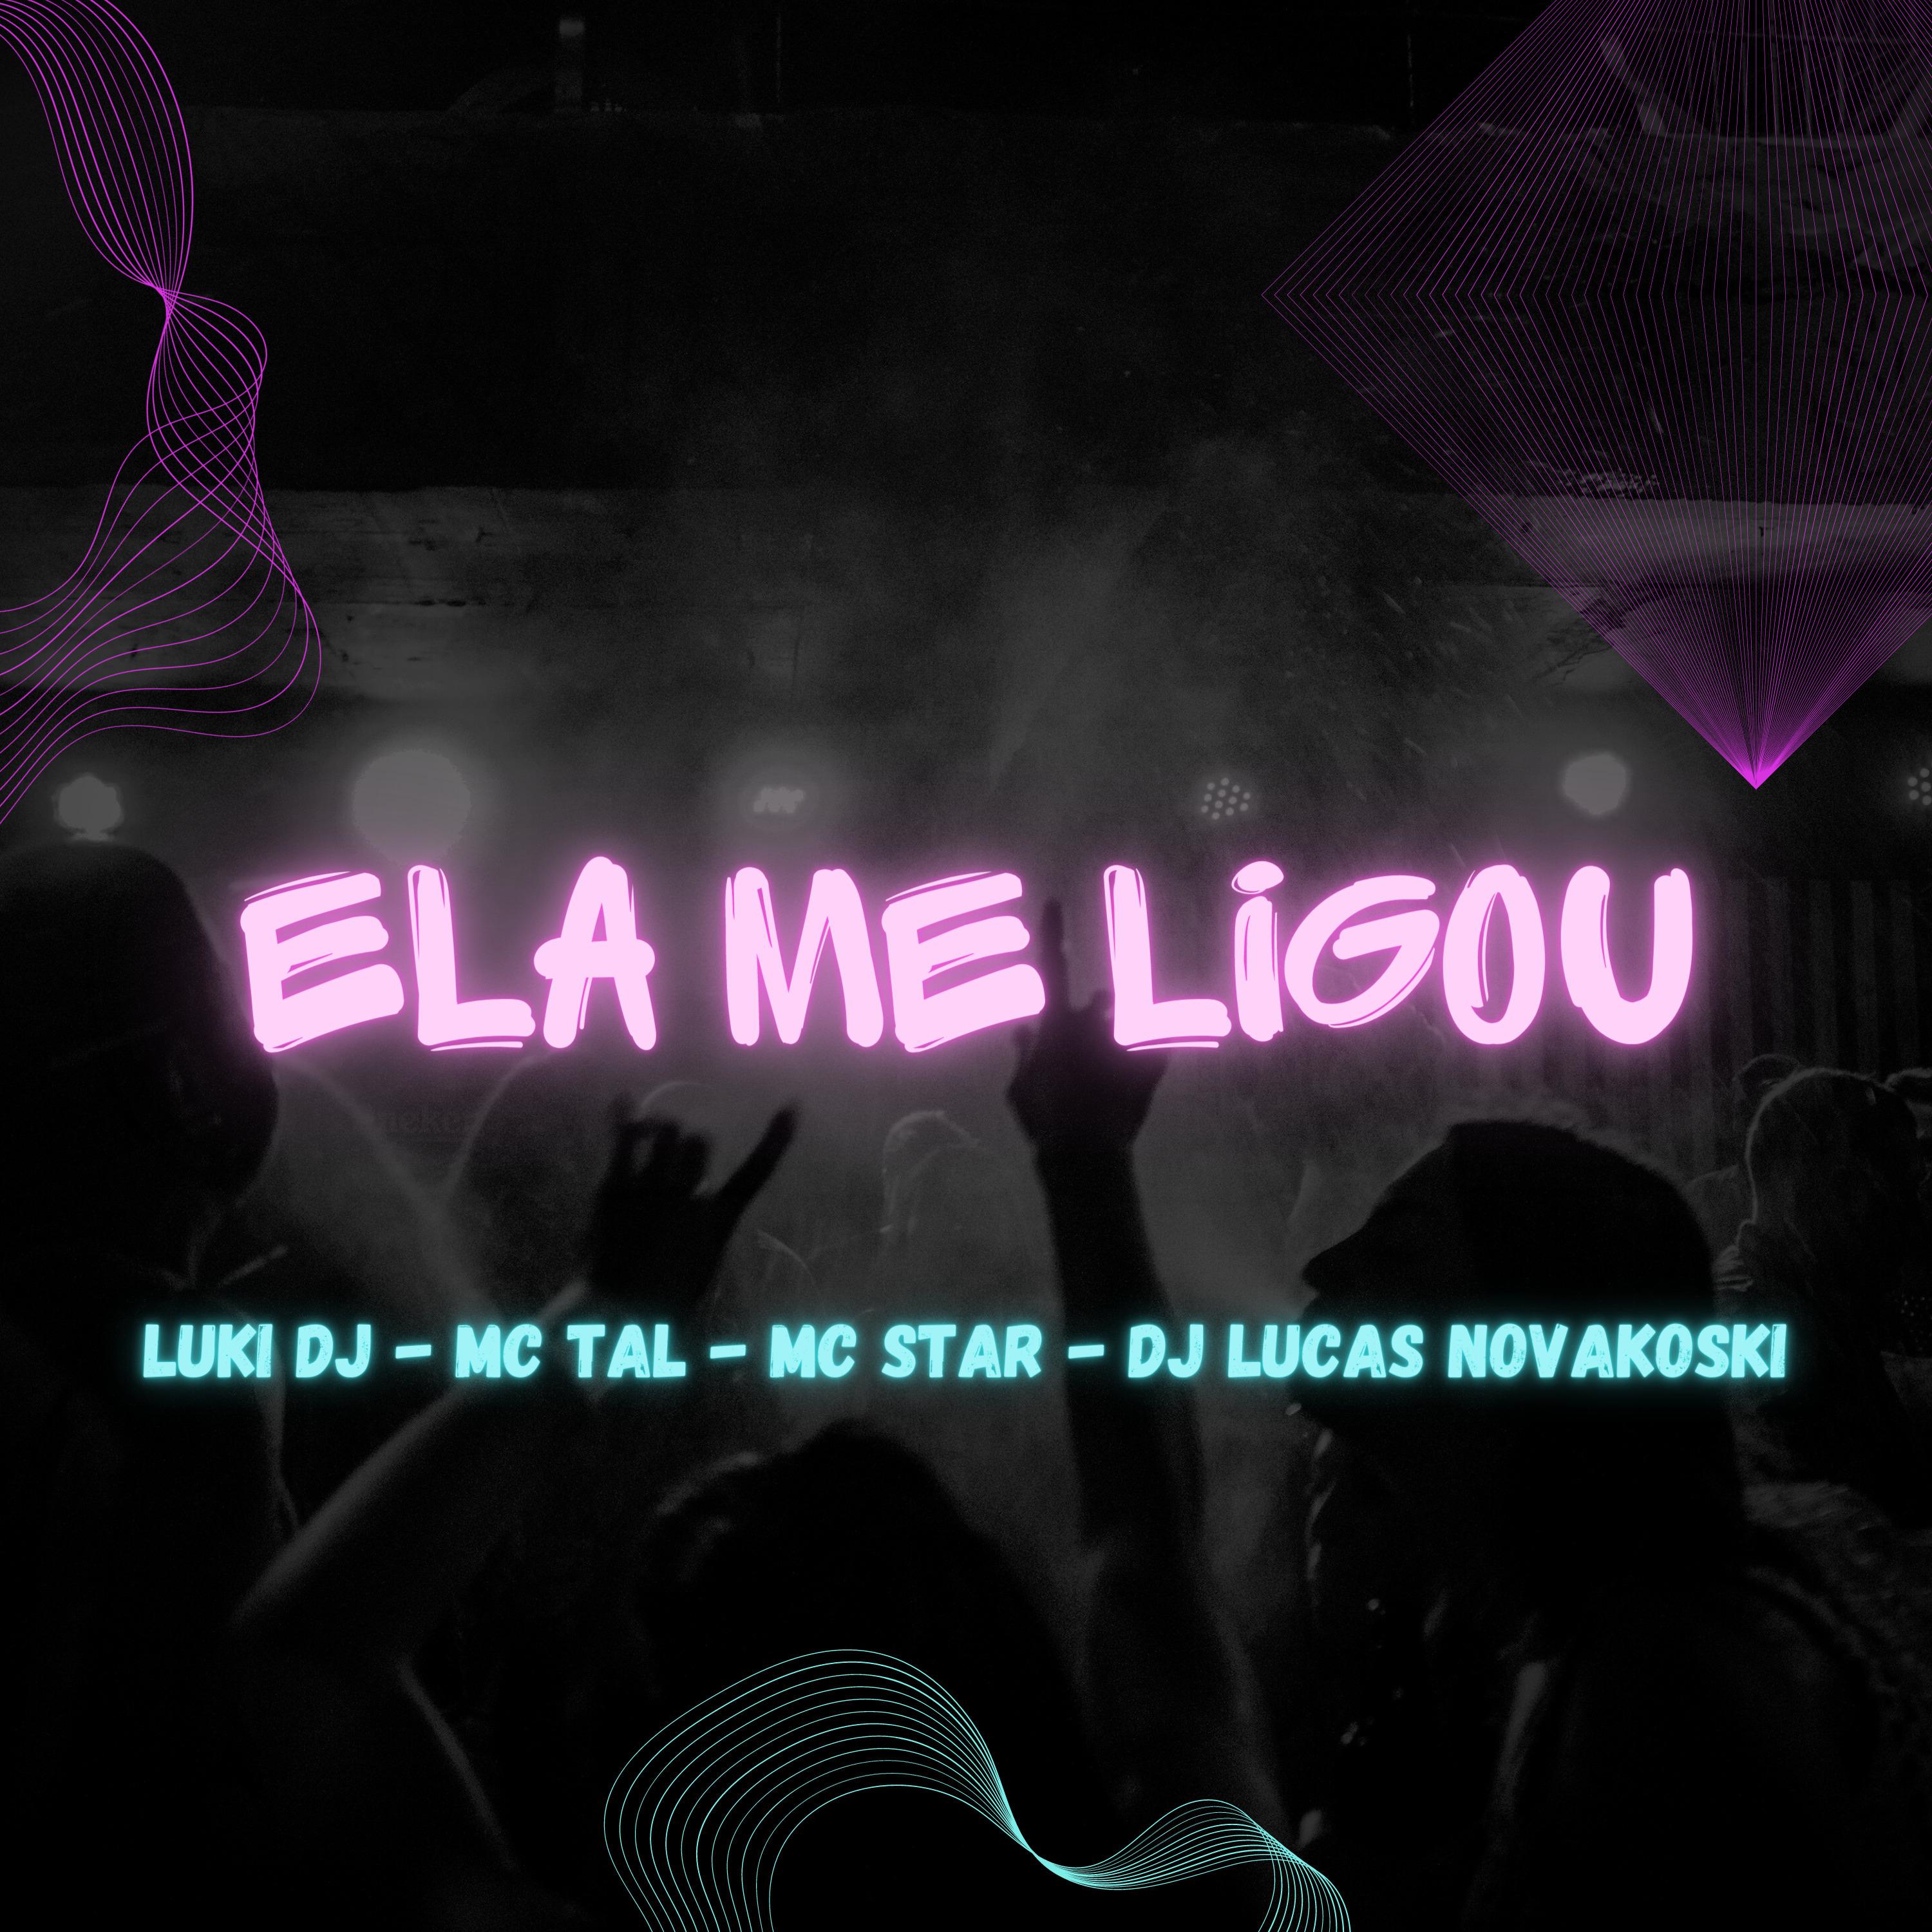 Dj Lucas Novakoski - Ela Me Ligou (feat. MC Star RJ & MC Tal)